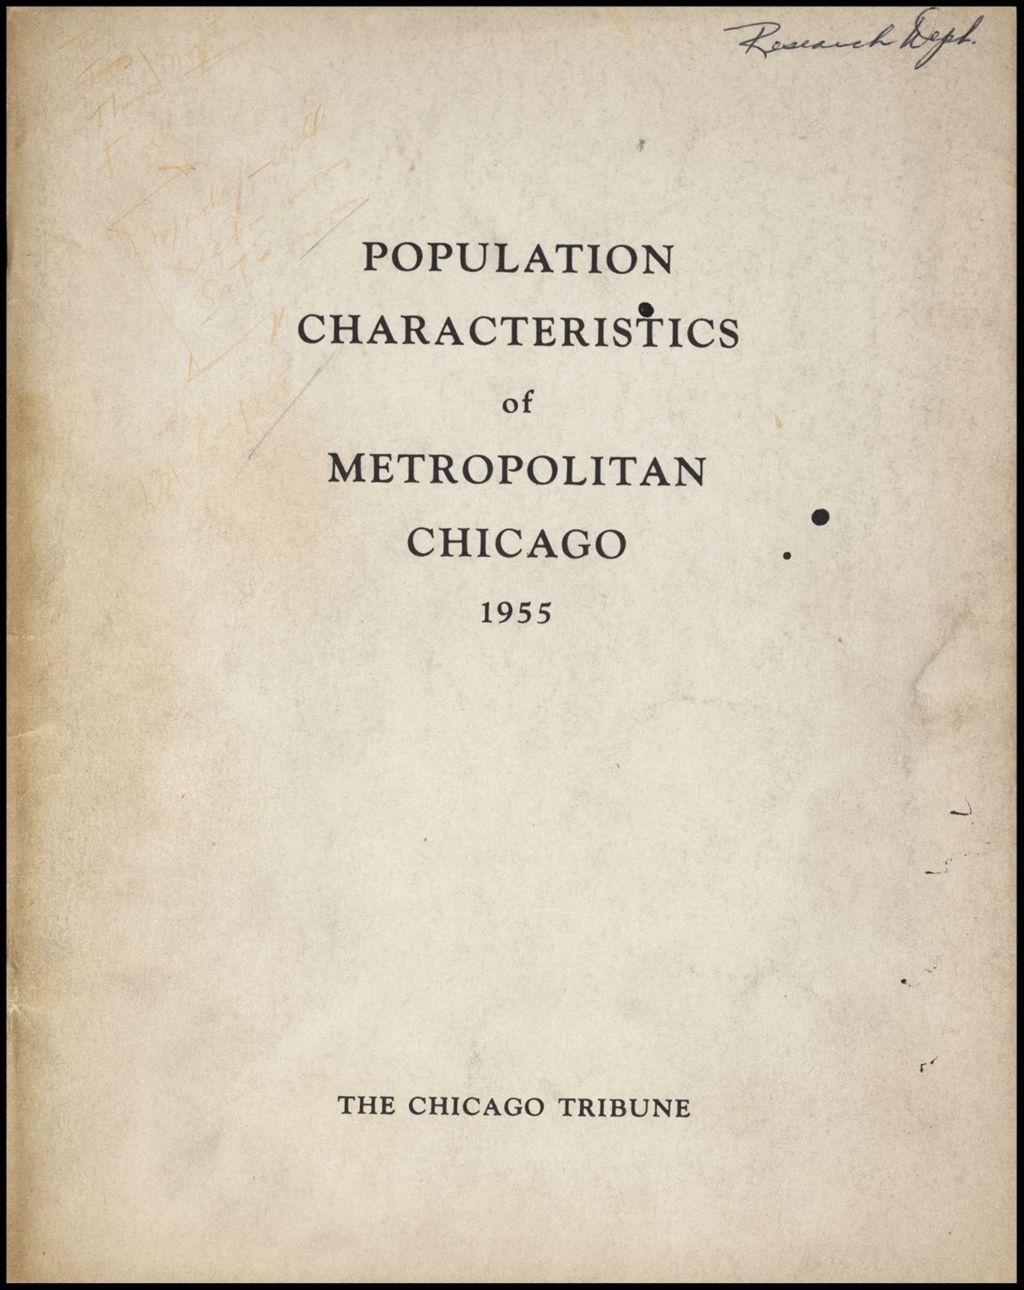 Miniature of US Census Population and Economic Census, 1950-1960 (Folder III-275)